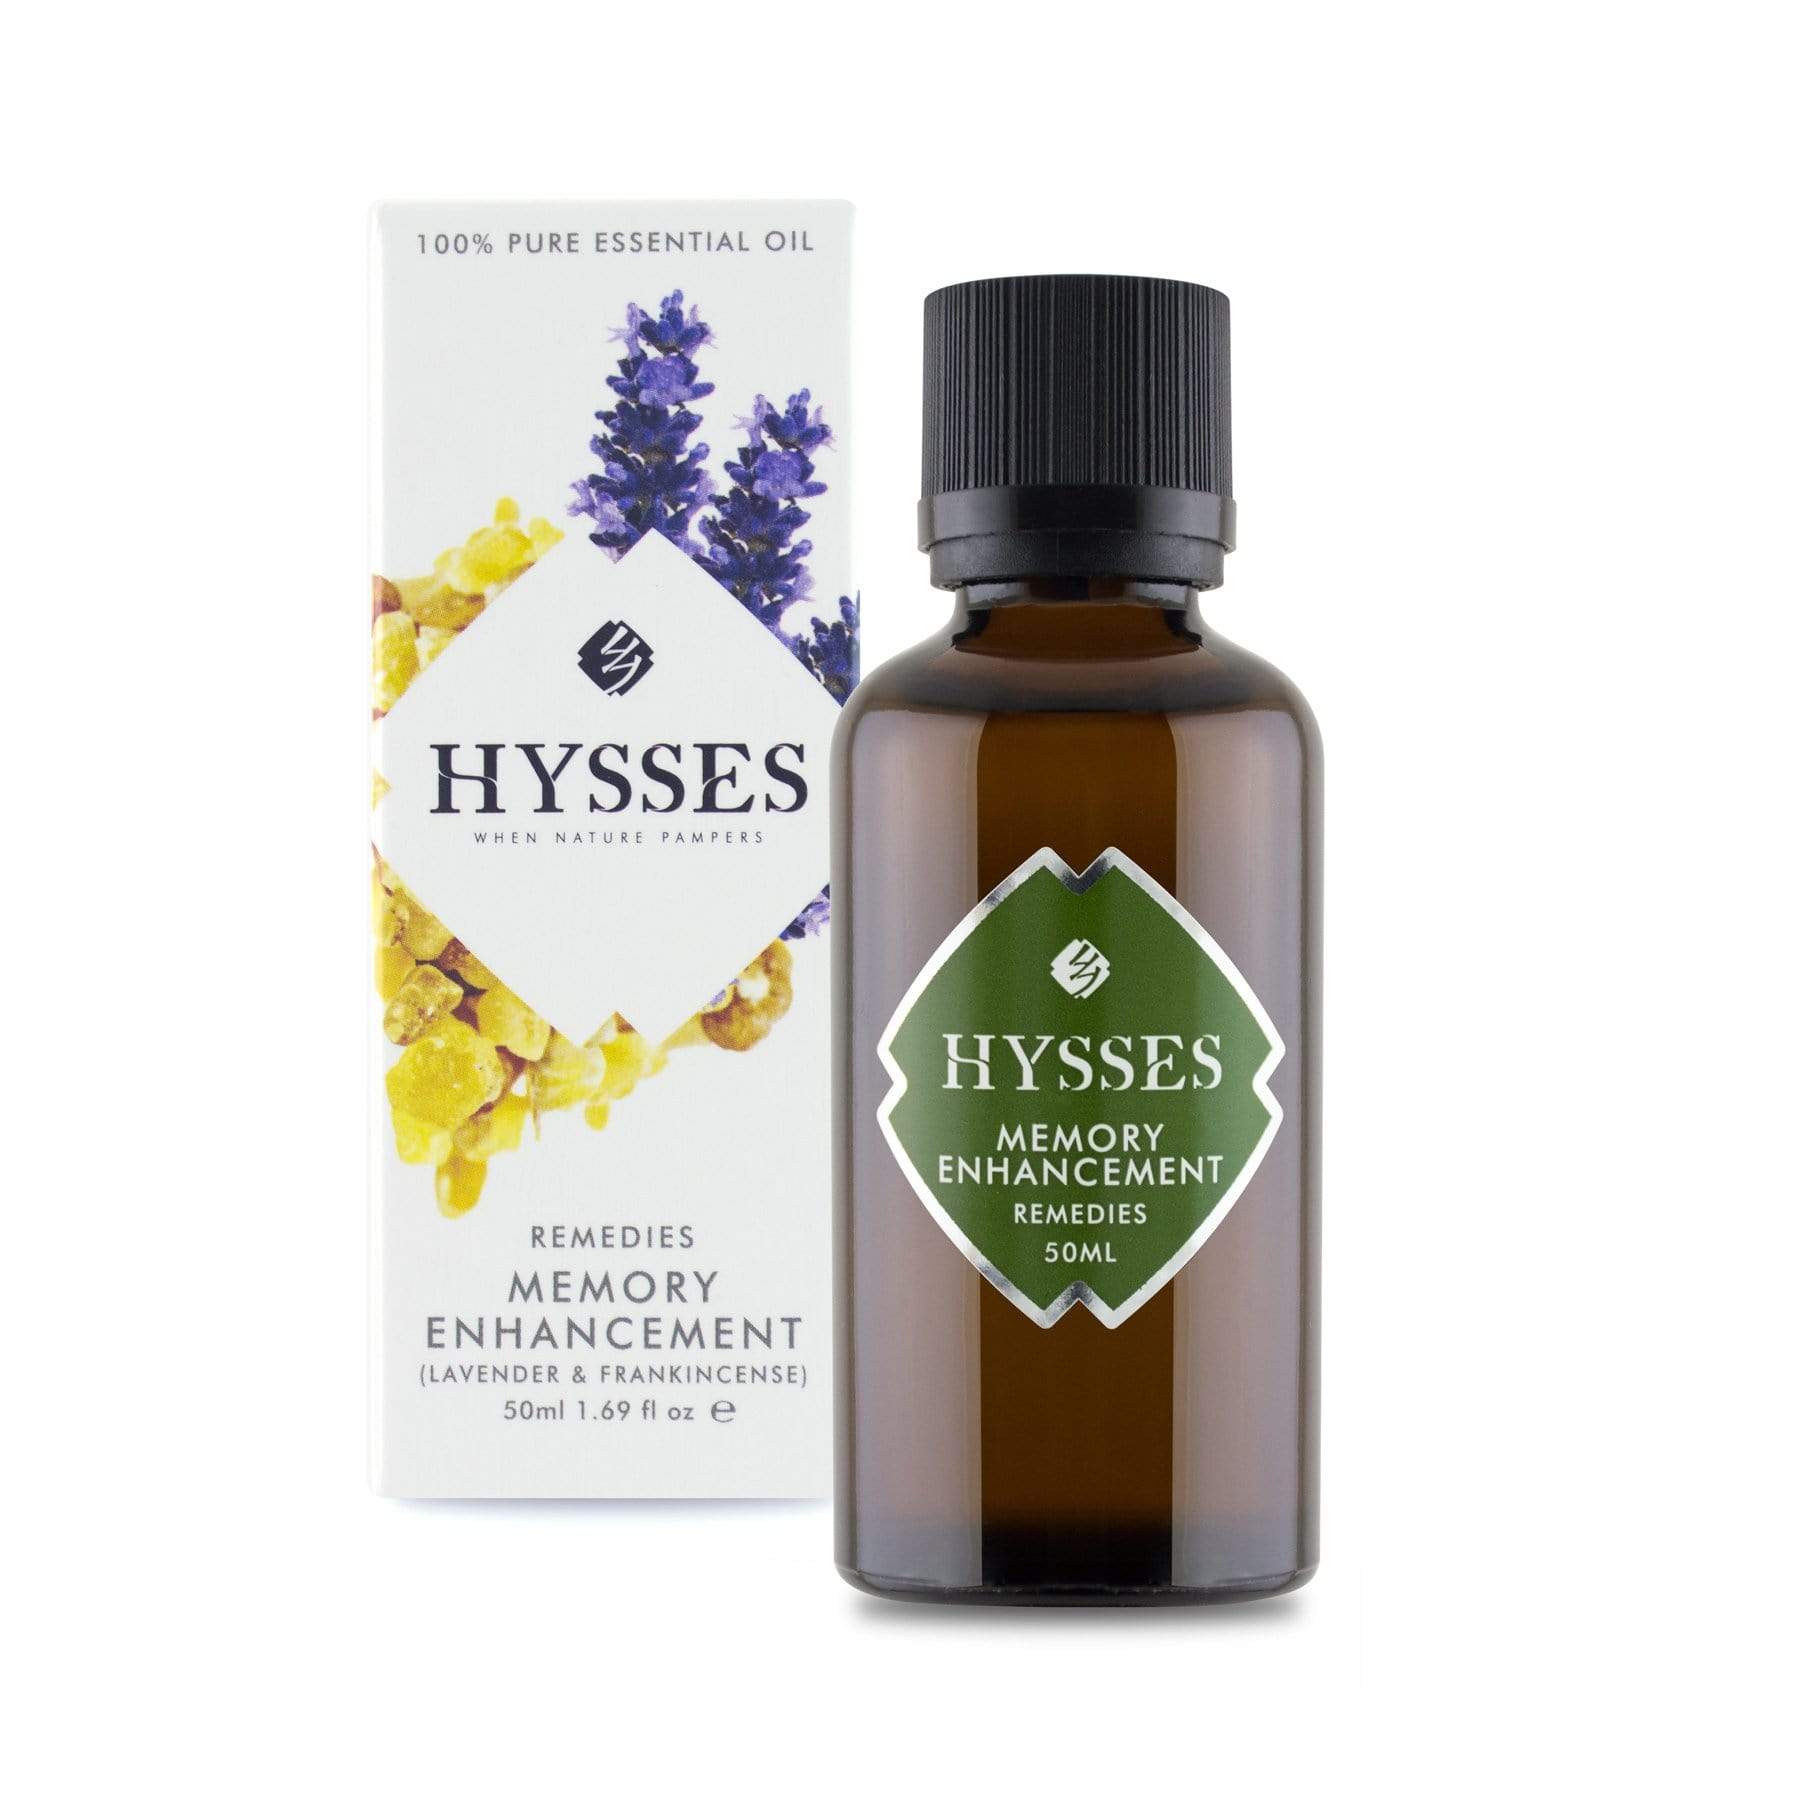 Hysses Essential Oil 10ml Remedies, Memory Enhancement